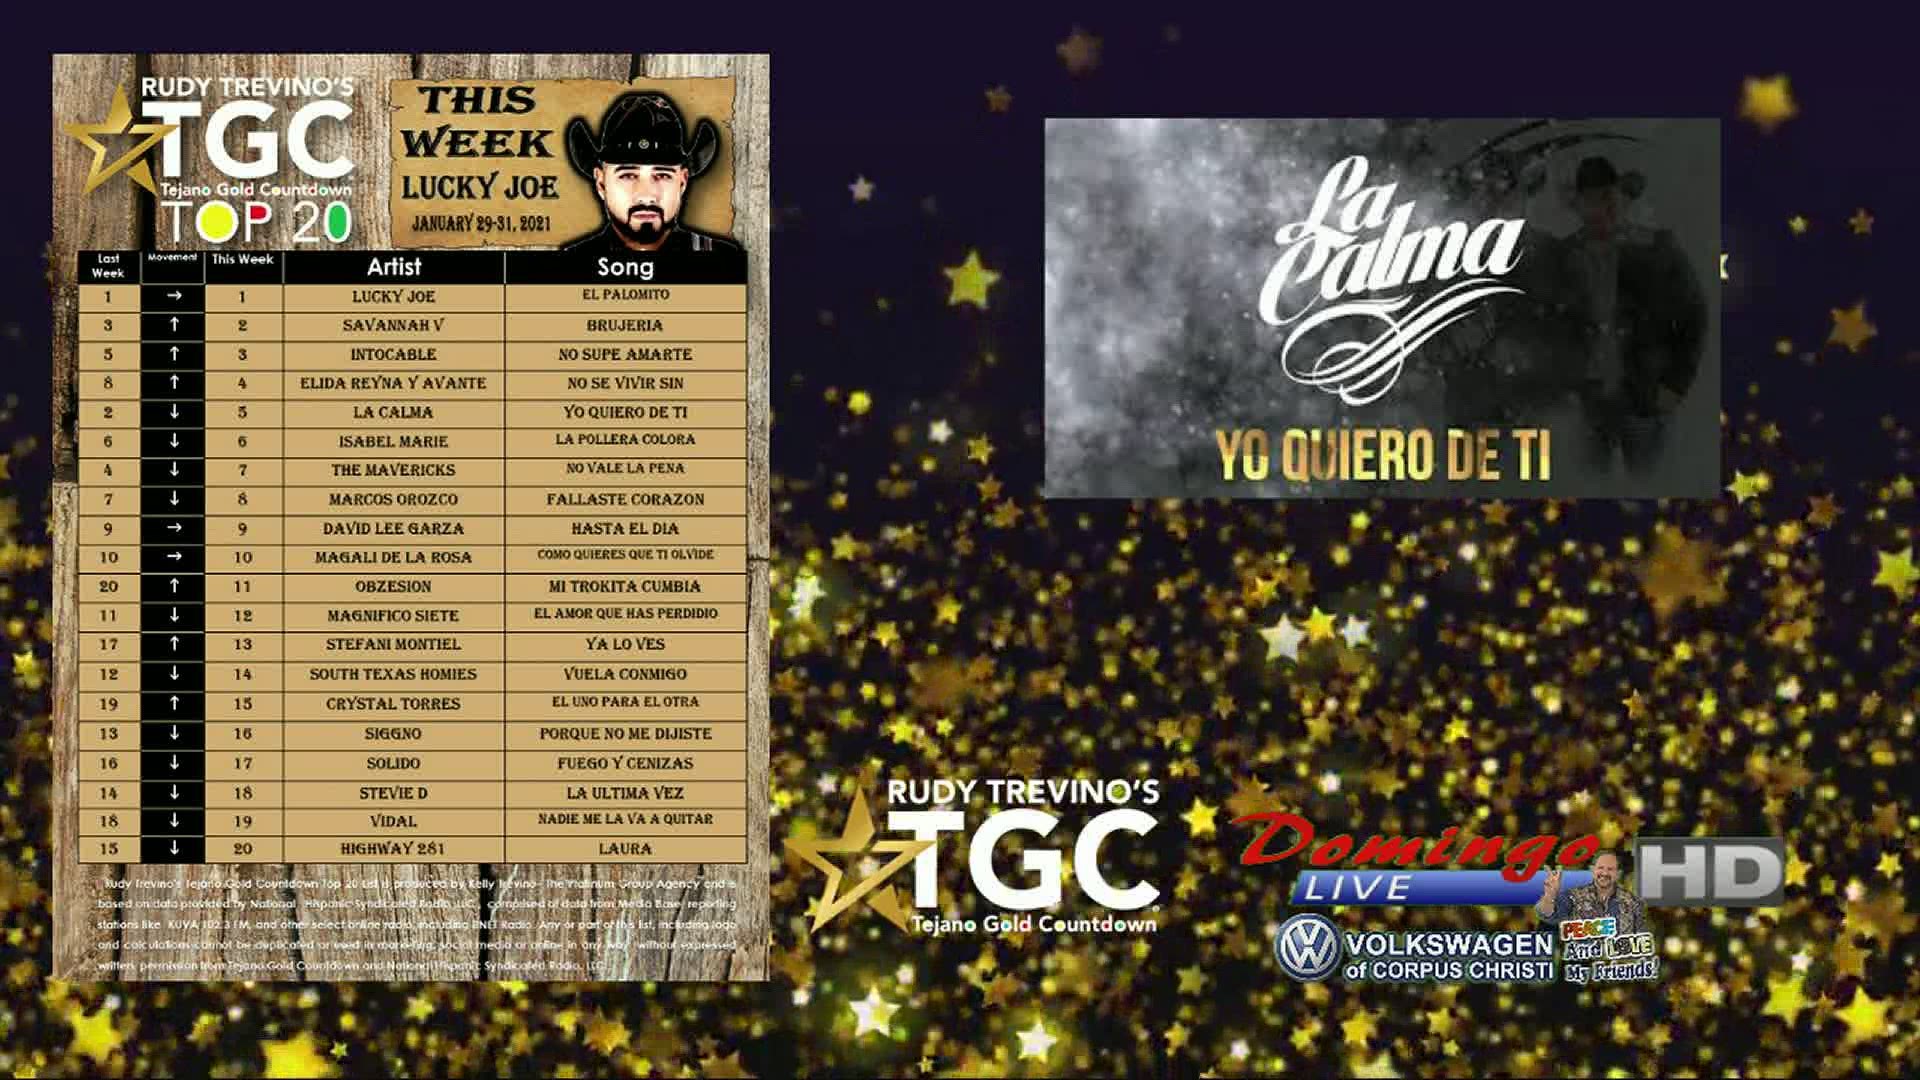 Tejano Gold Countdown- Top 5